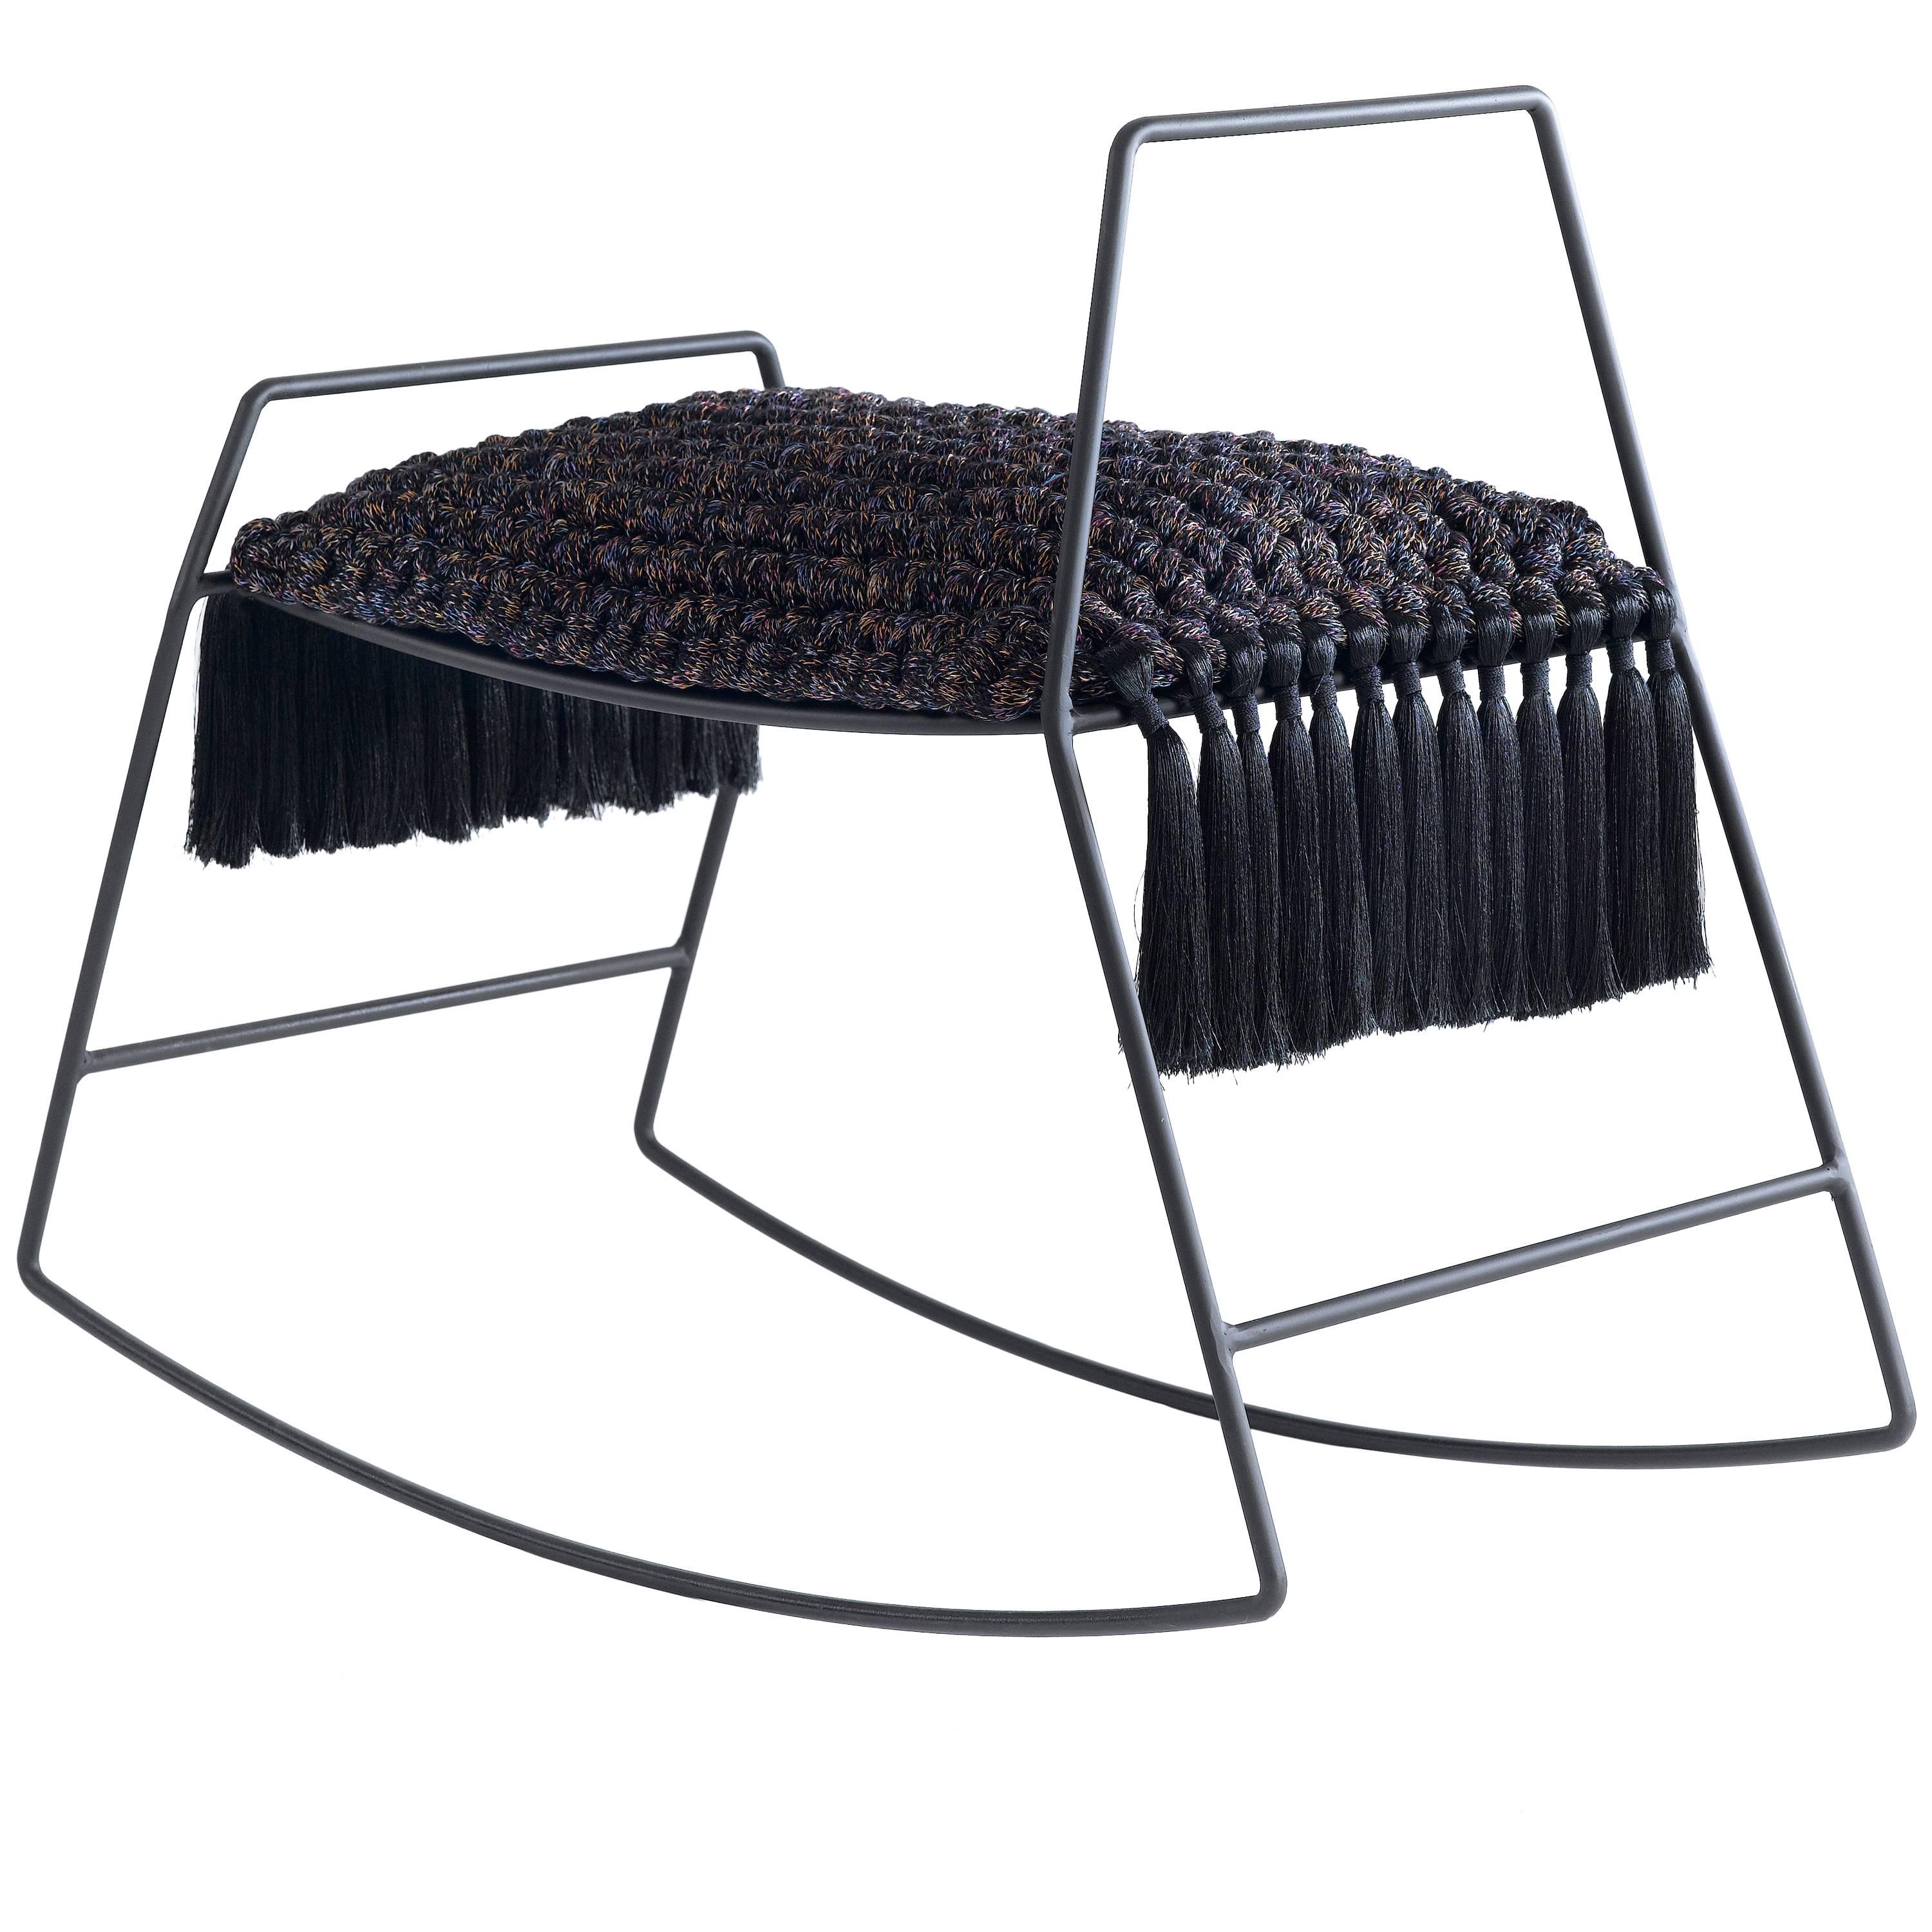 Matte Black Iron Handmade Textile Rocking Horse Stool with Cushion Seat